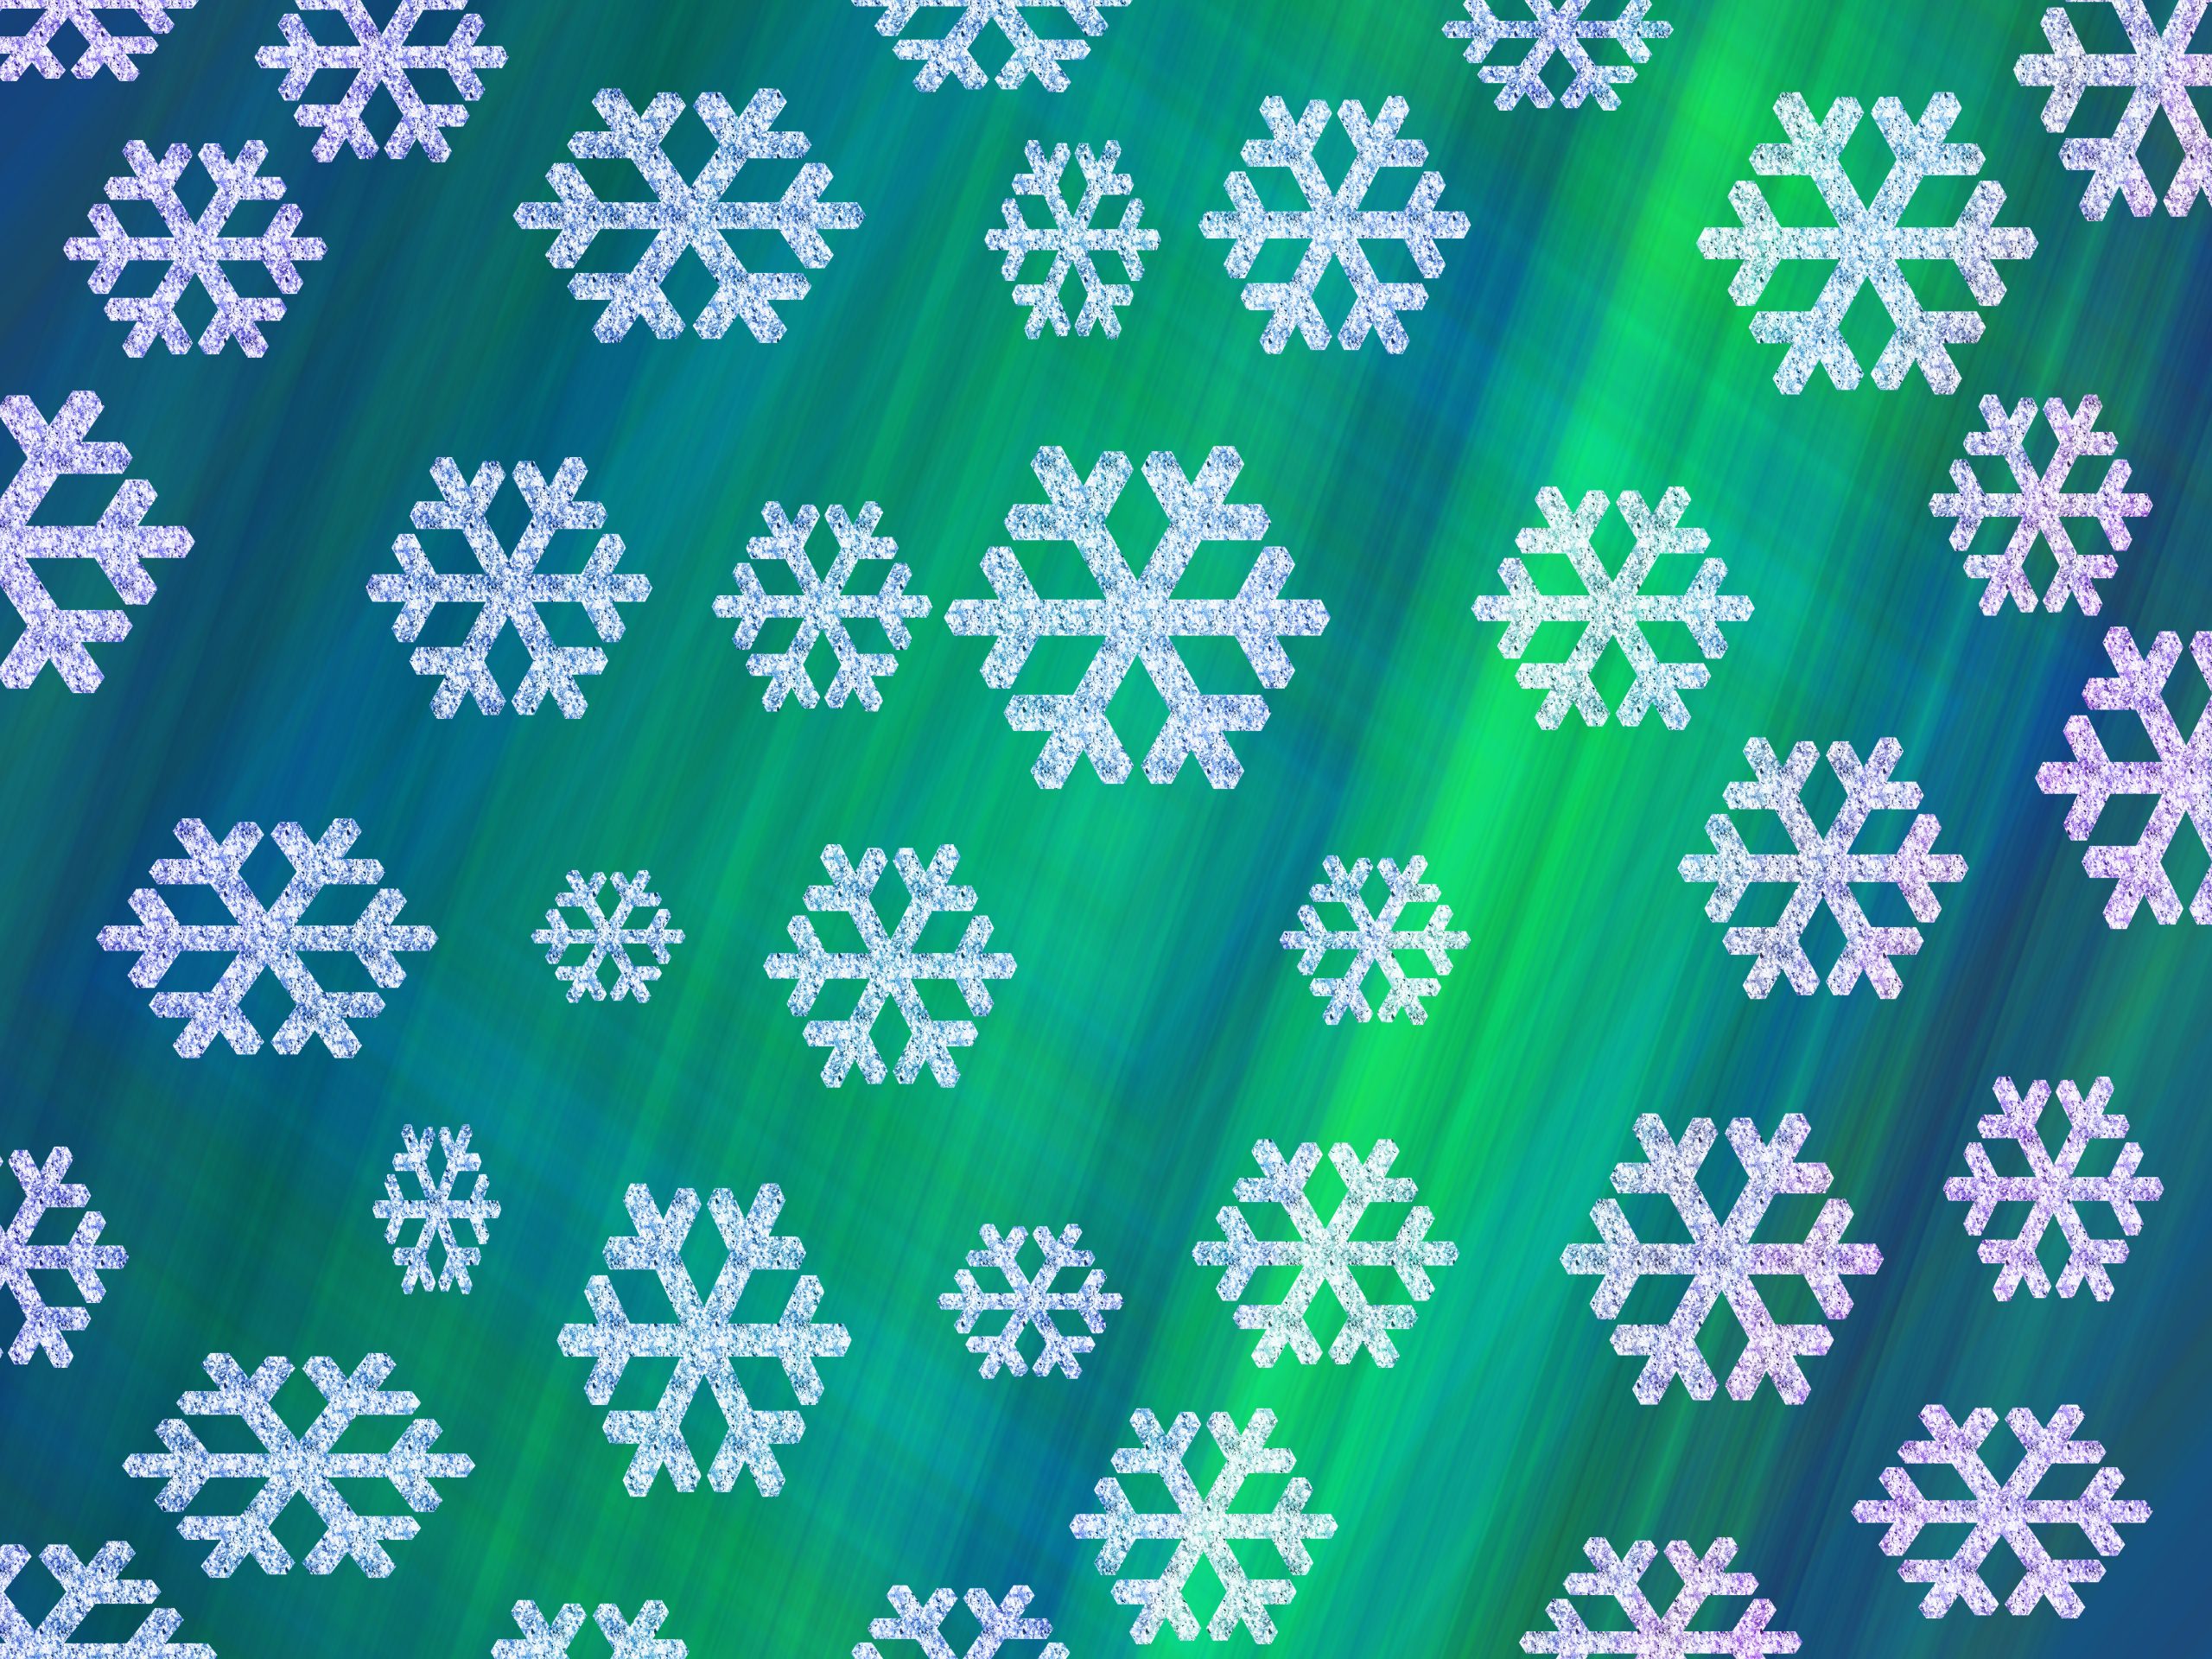 Snow flakes abstract illustration